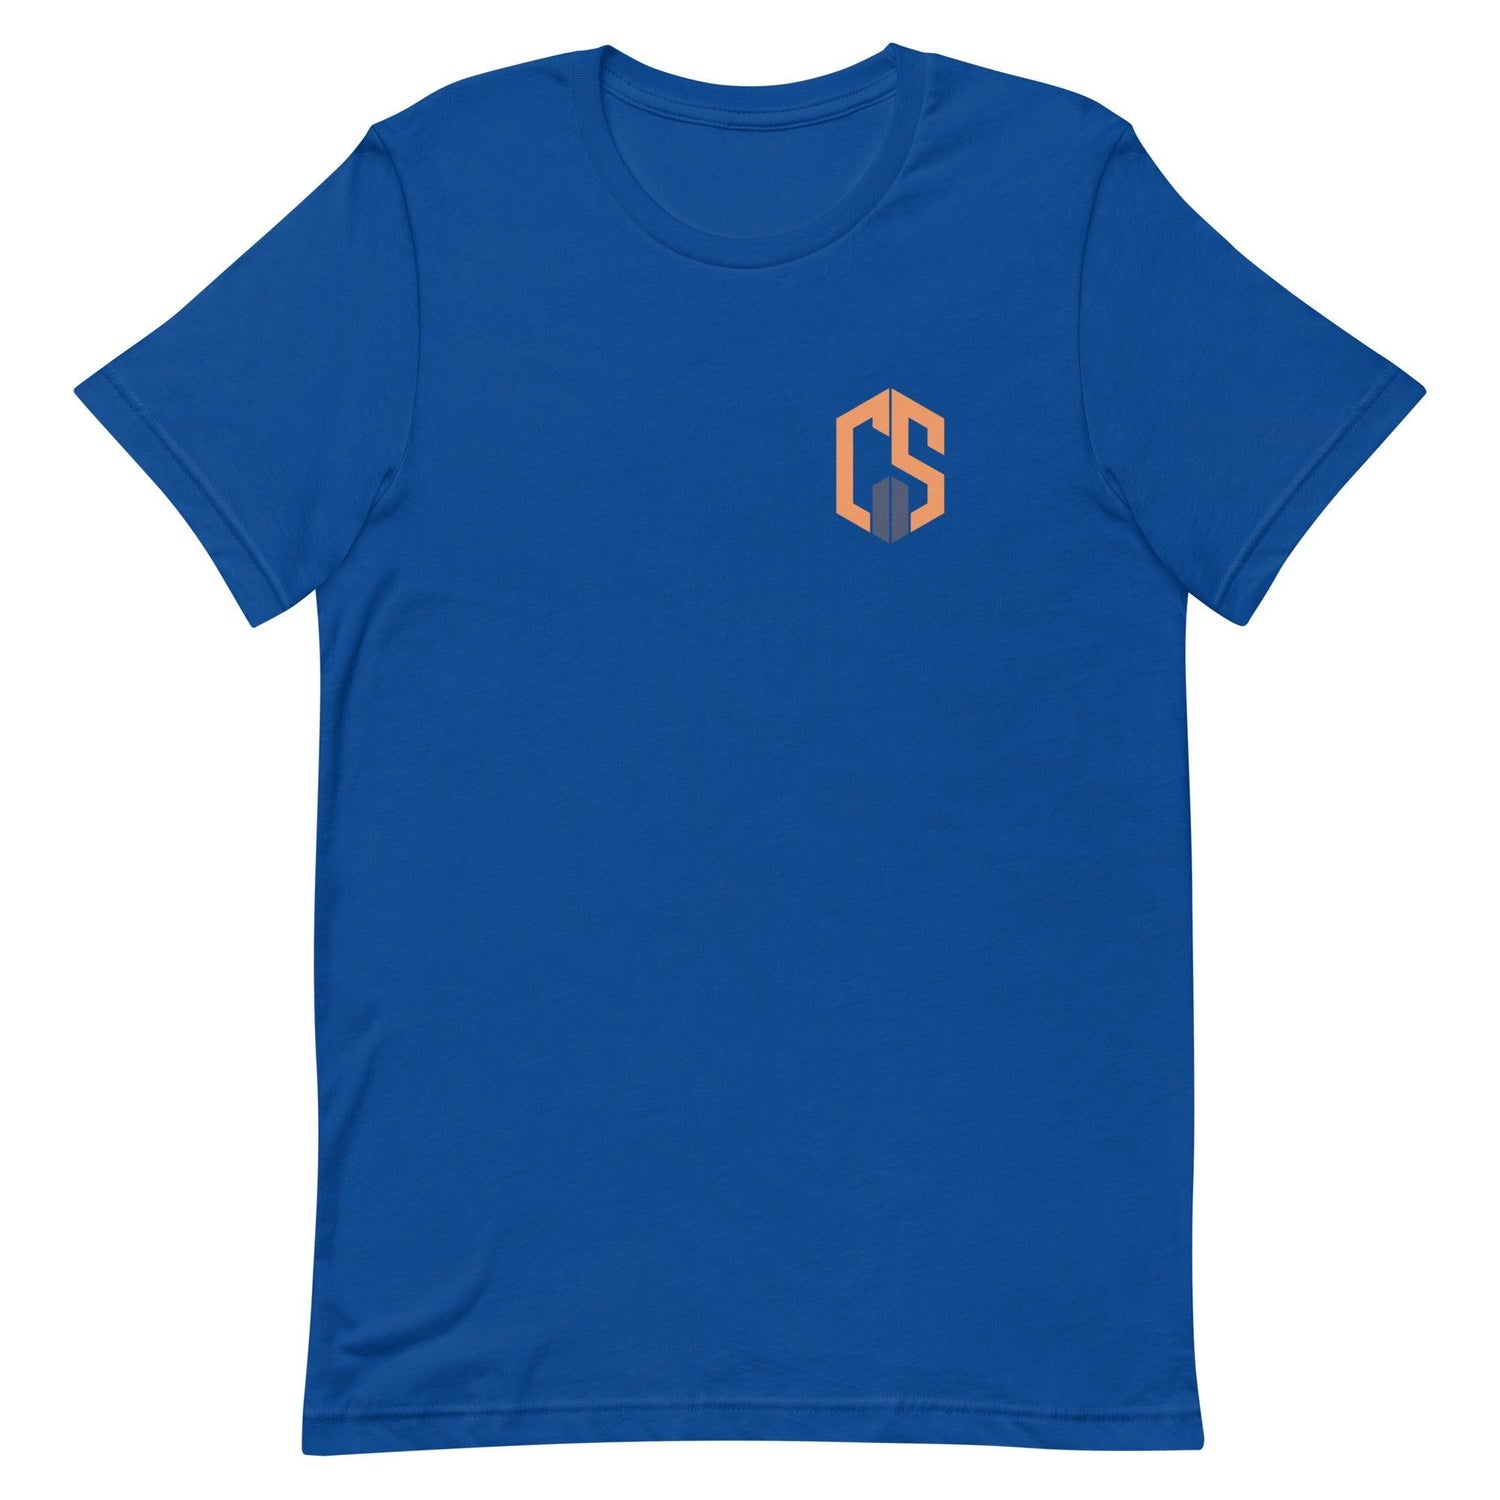 Casey Saucke II “Signature” t-shirt - Fan Arch